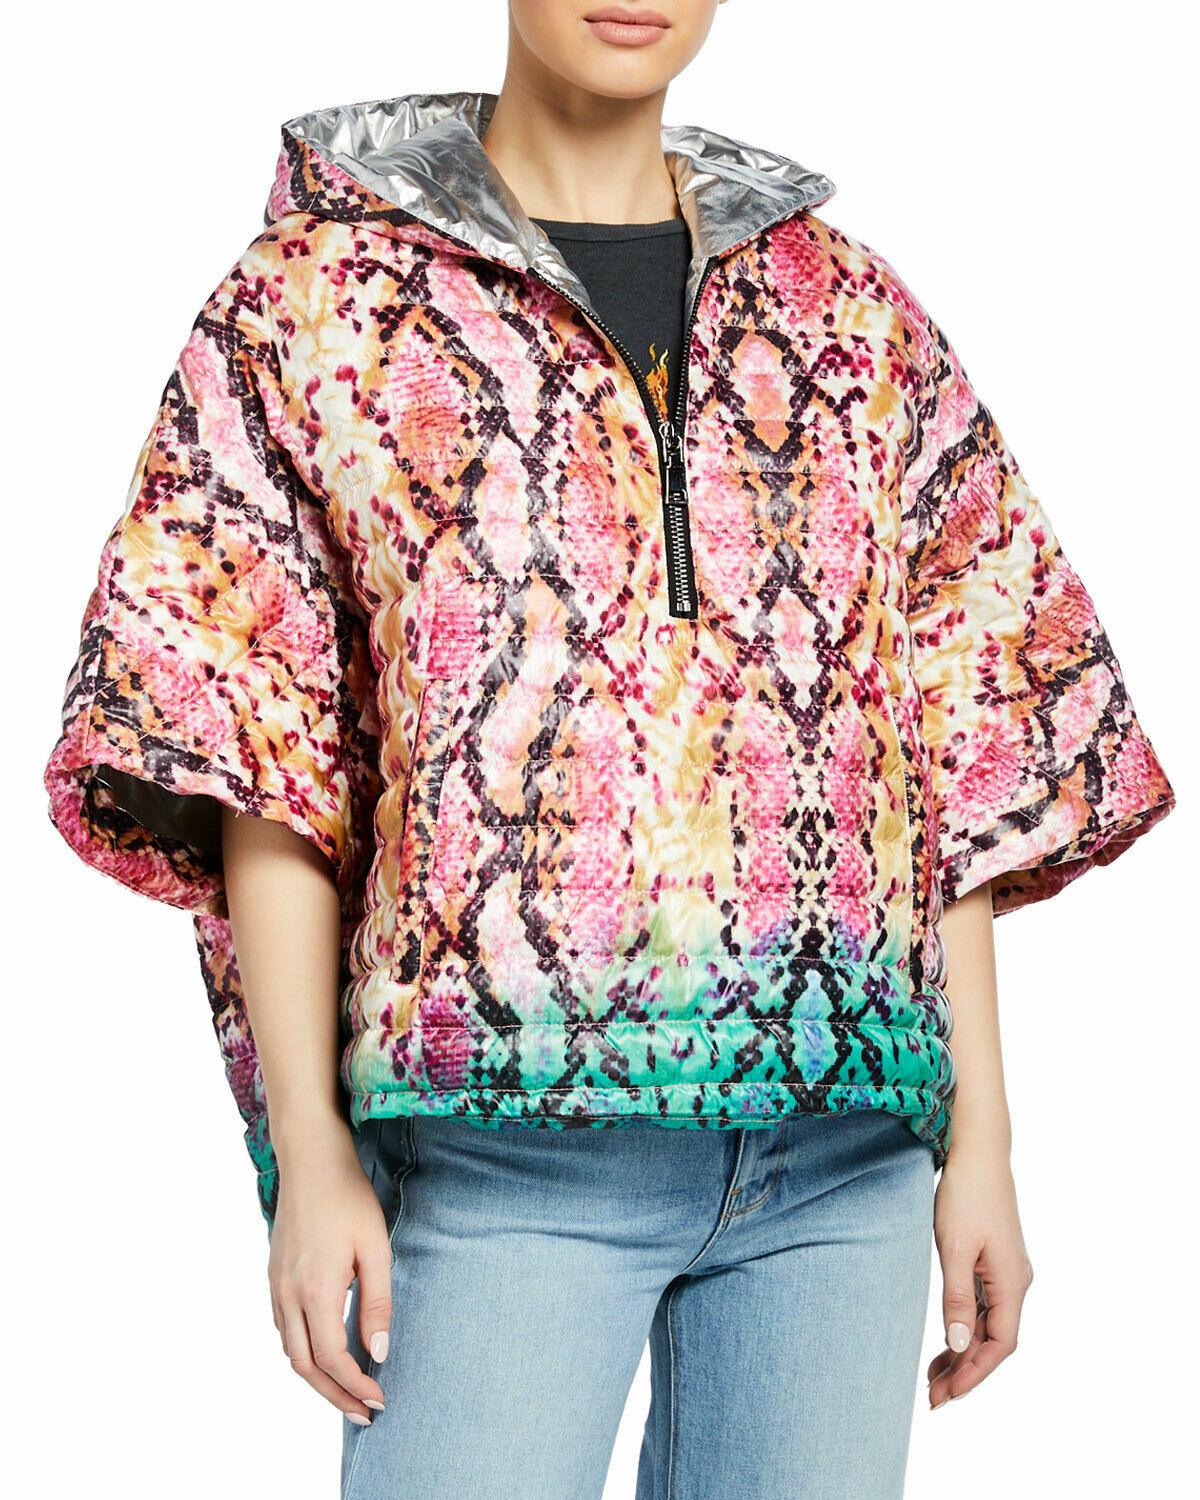 THINK ROYLN Women's Quilted Python-Print Puffer Poncho Ski Jacket Size XS/S - SVNYFancy